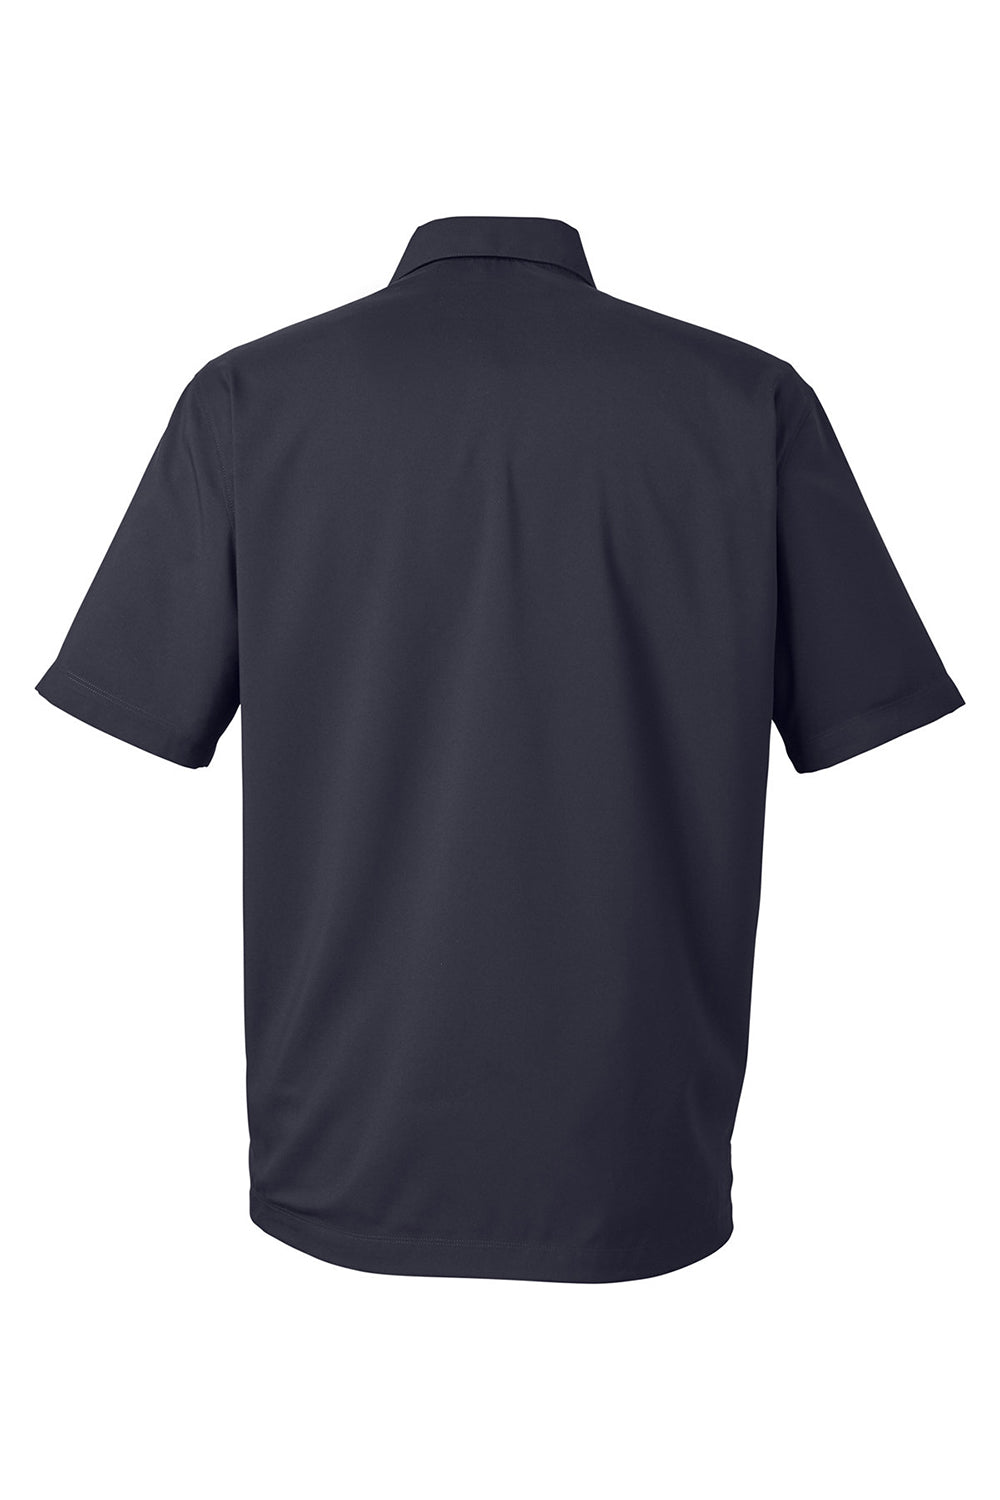 Under Armour 1351360 Mens Motivate Moisture Wicking Short Sleeve Button Down Shirt w/ Pocket Black Flat Back